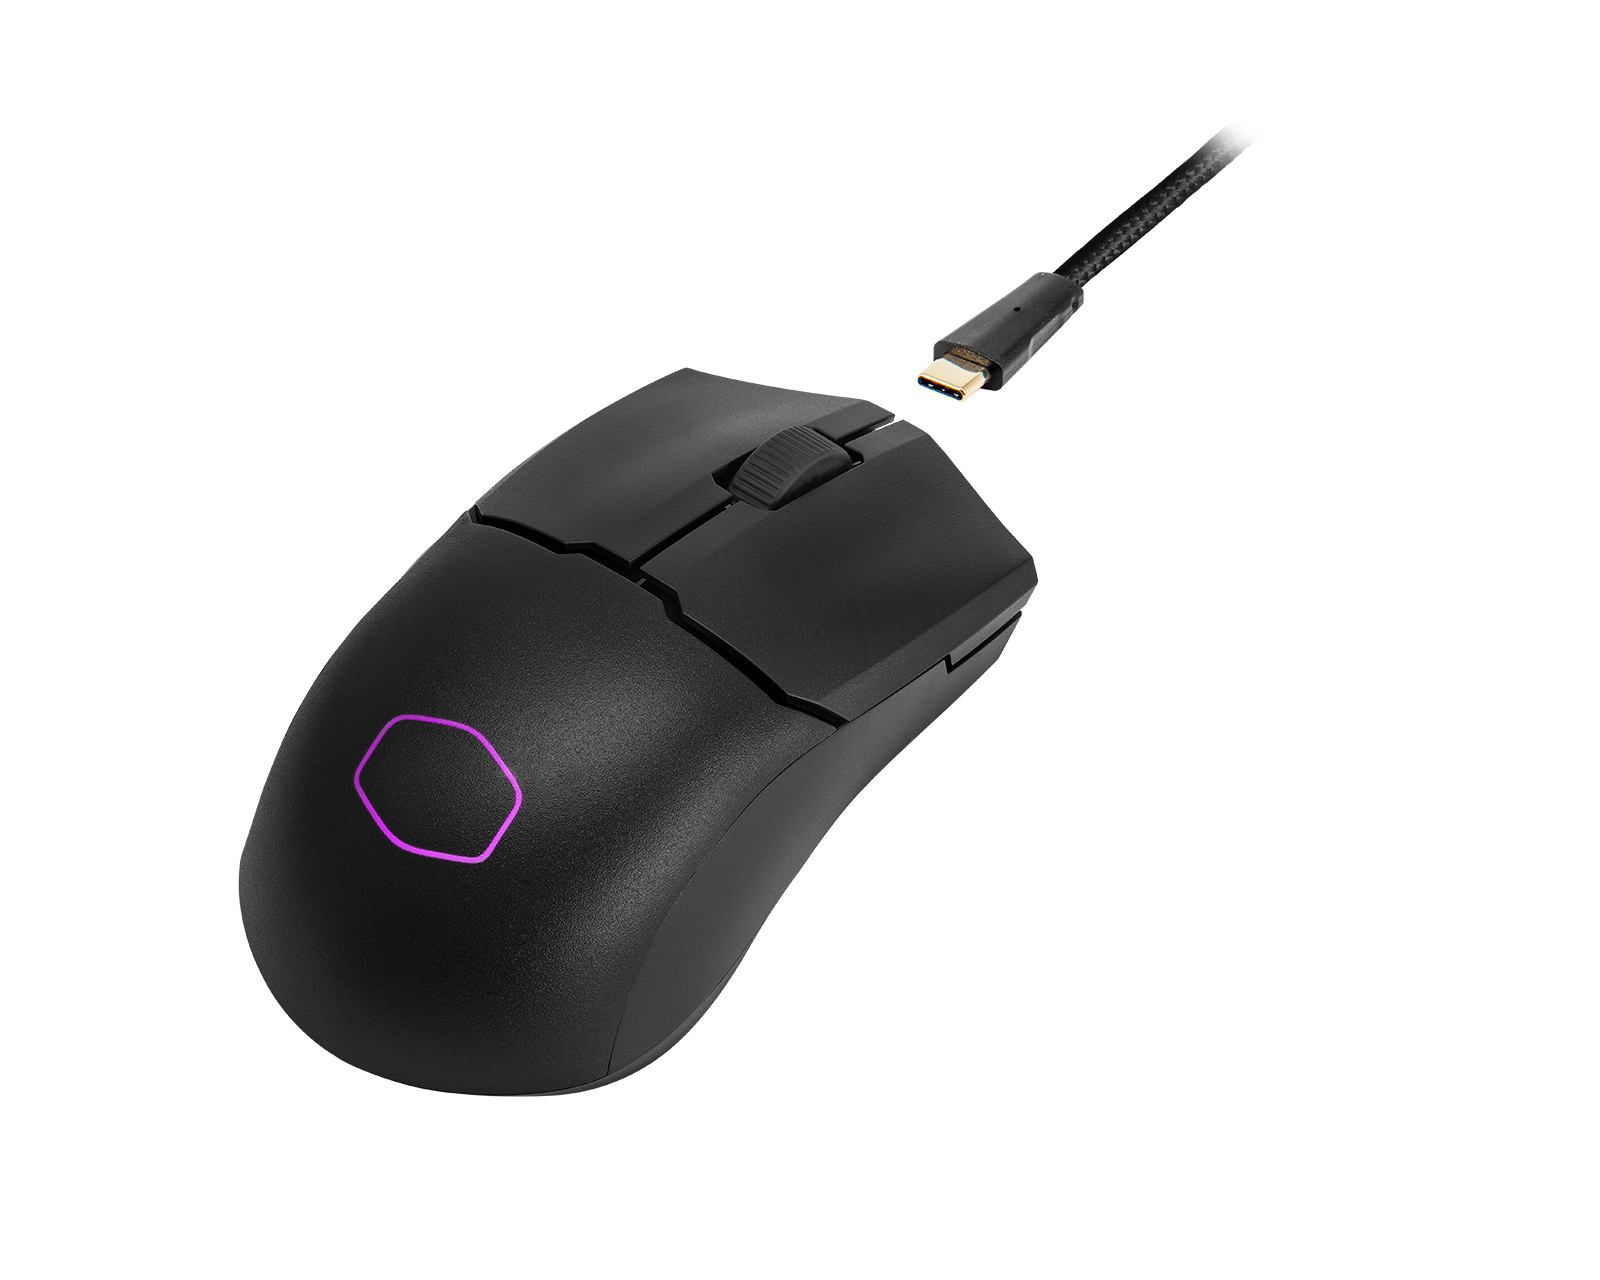 Cooler Master MM712 Hybrid Ultra Light RGB Wireless Gaming Mouse - Black 